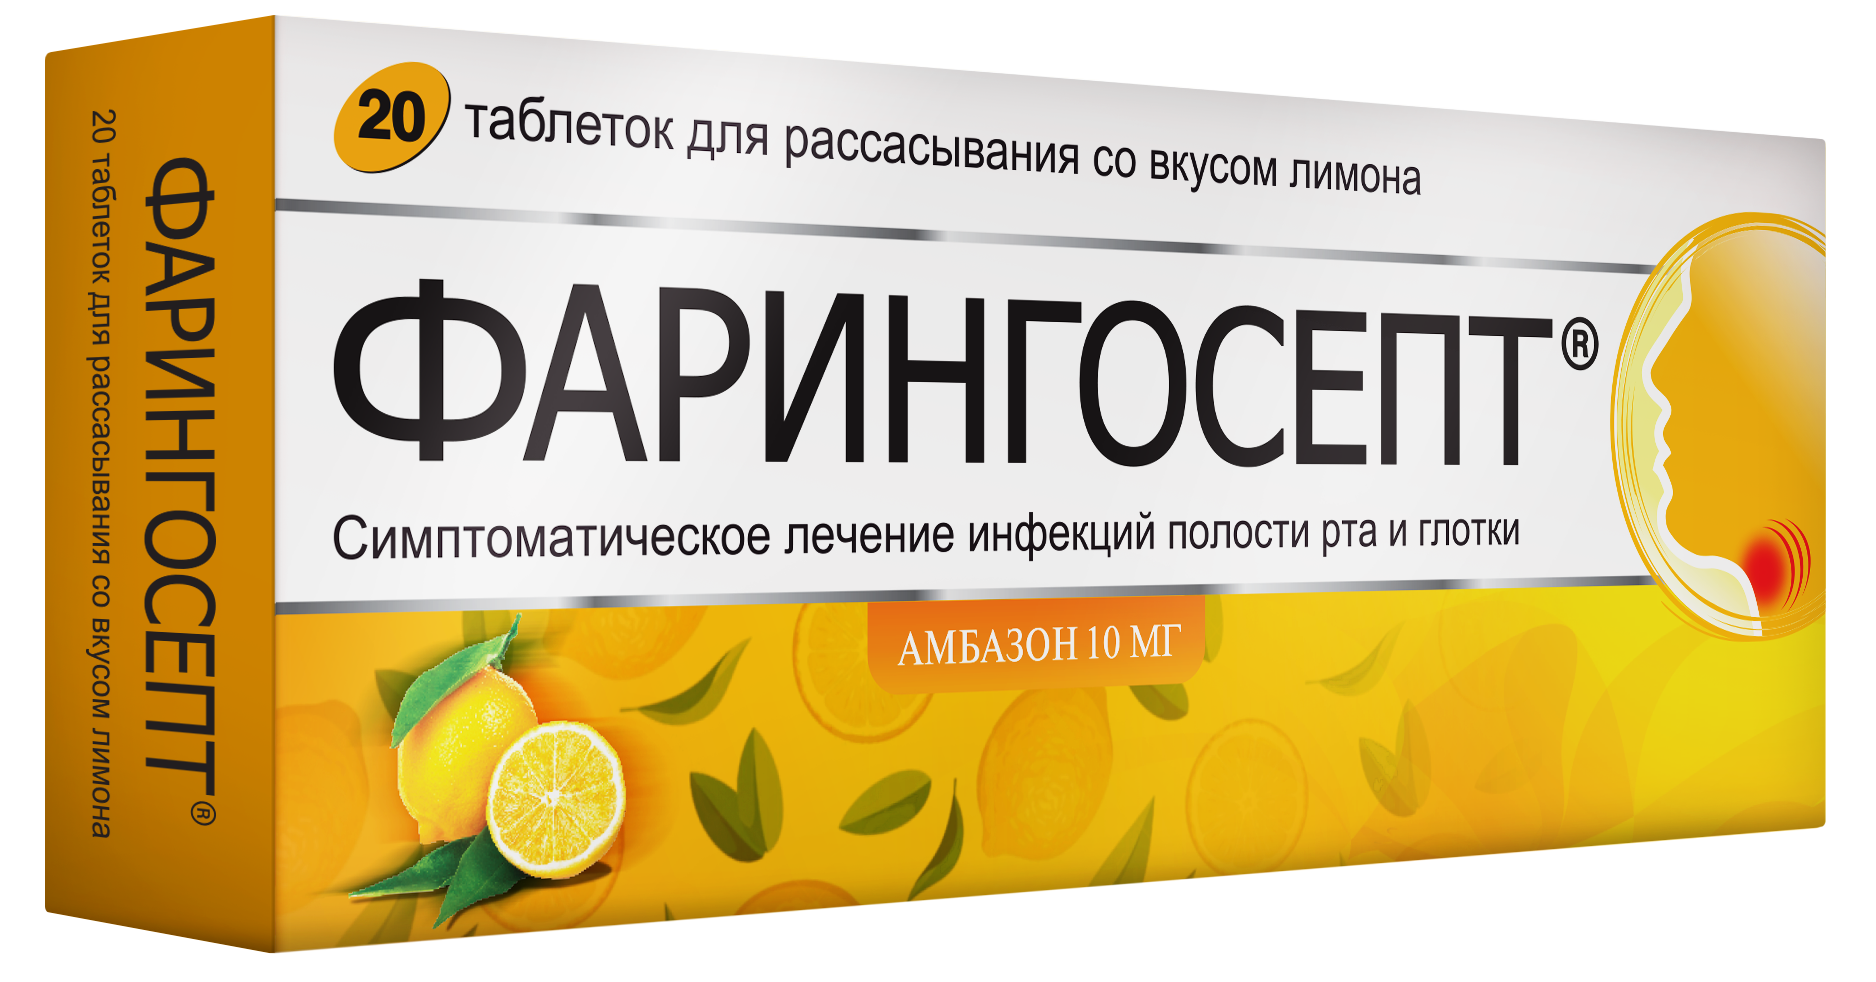 Фарингосепт, таблетки для рассасывания (лимон) 10 мг, 20 шт. фарингосепт таблетки для рассасывания 20 шт